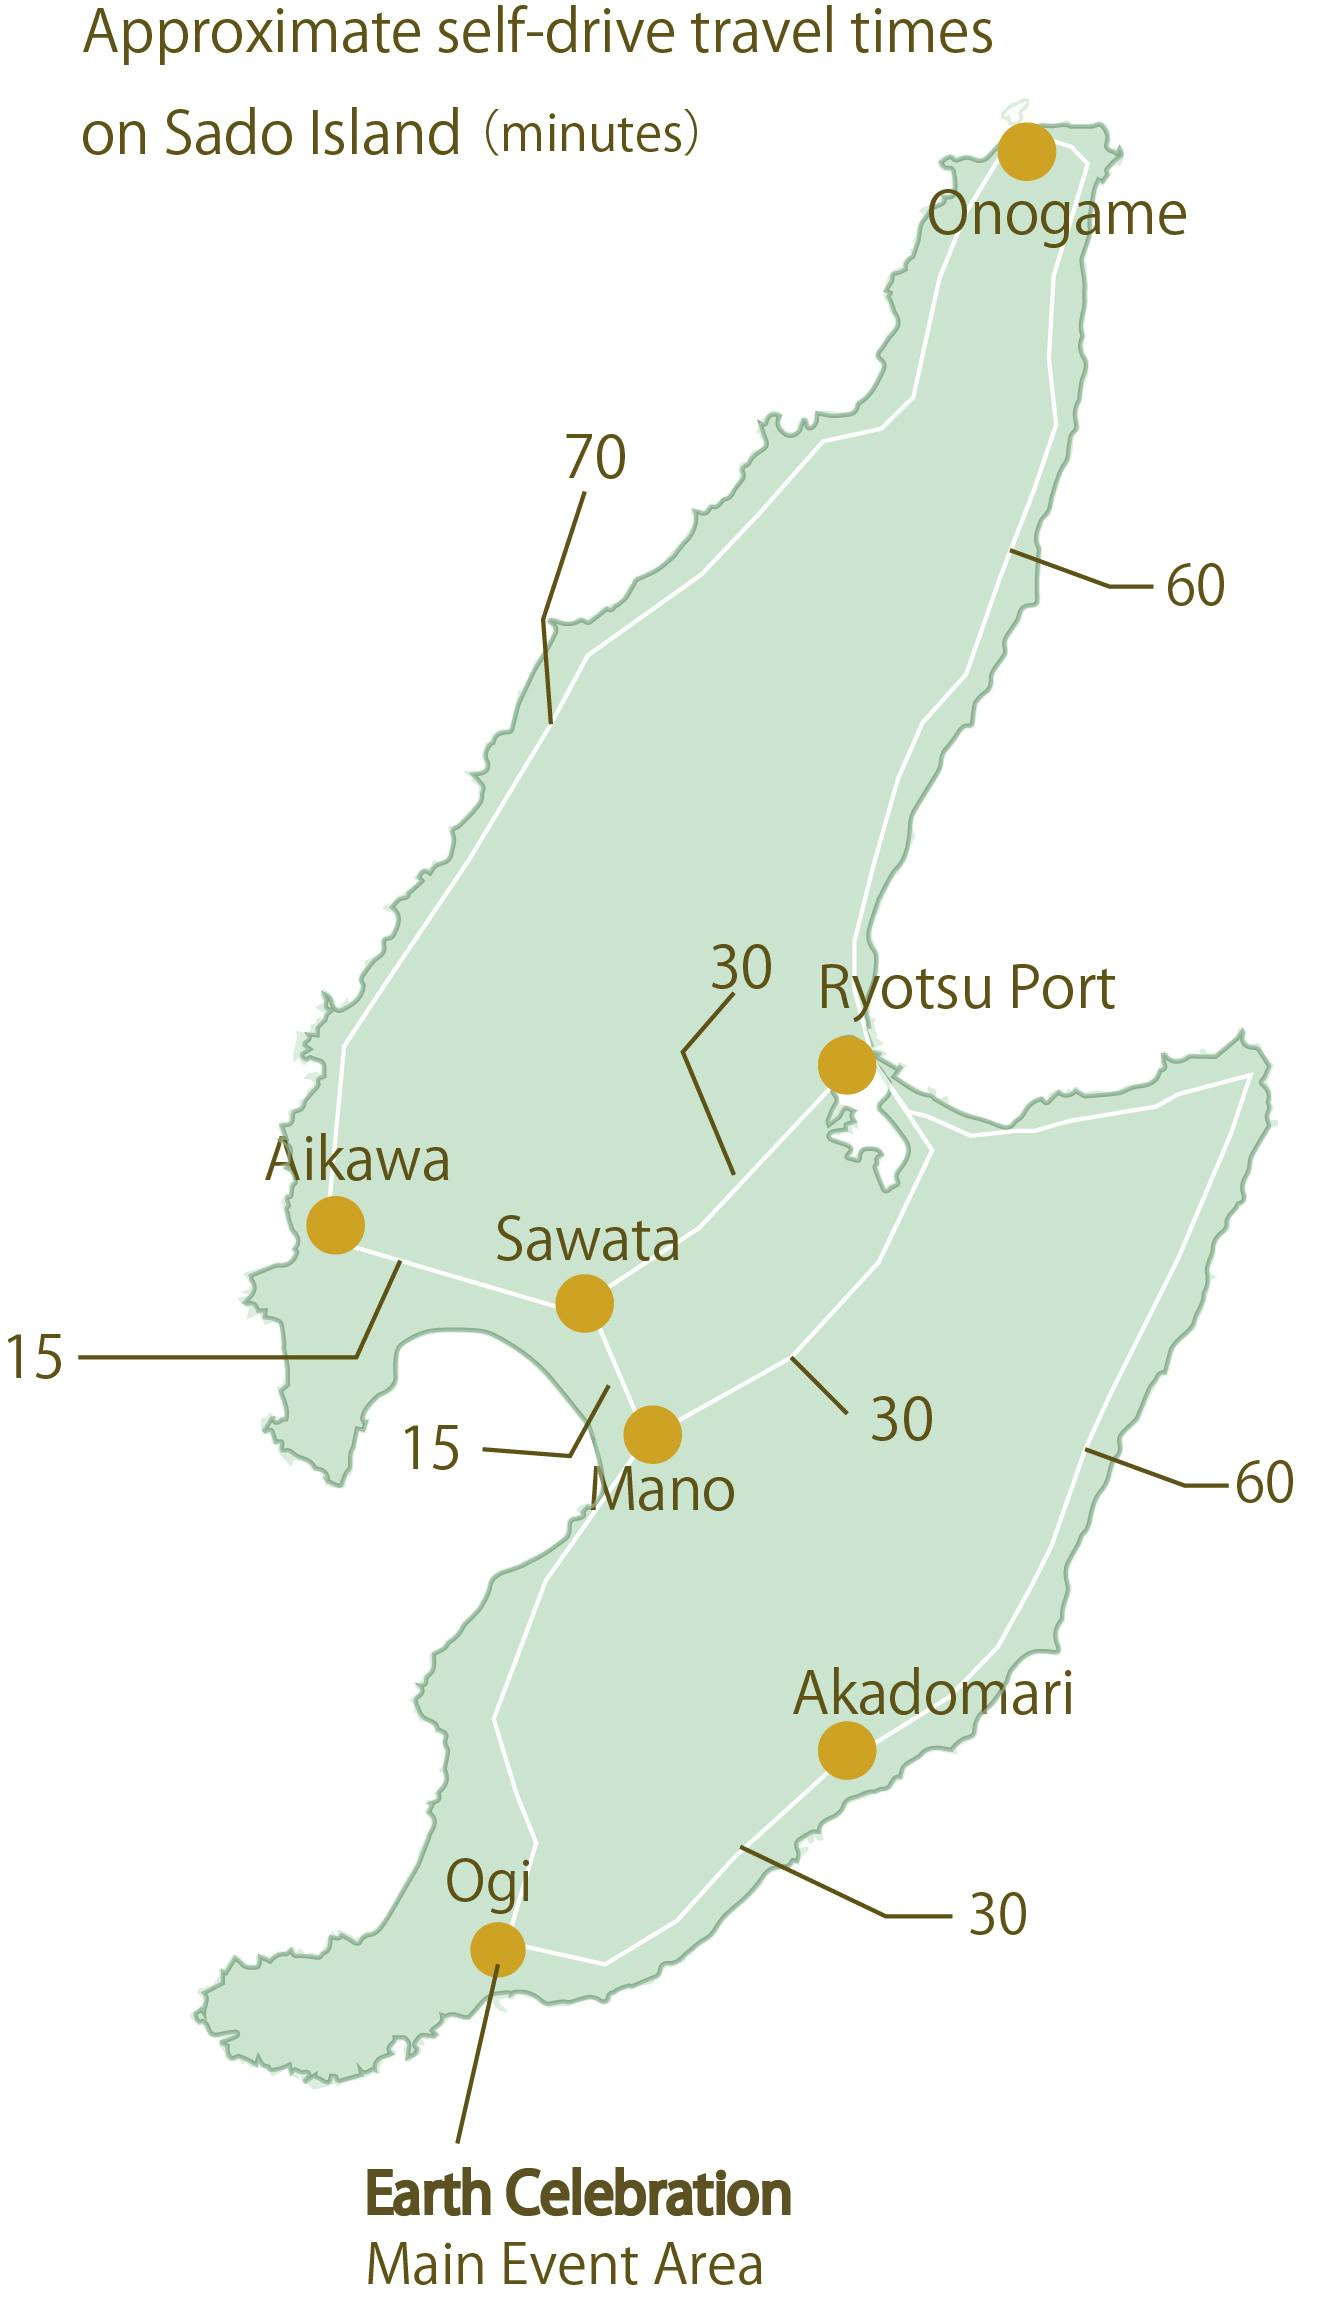 Approximate self-drive travel times on Sado Island